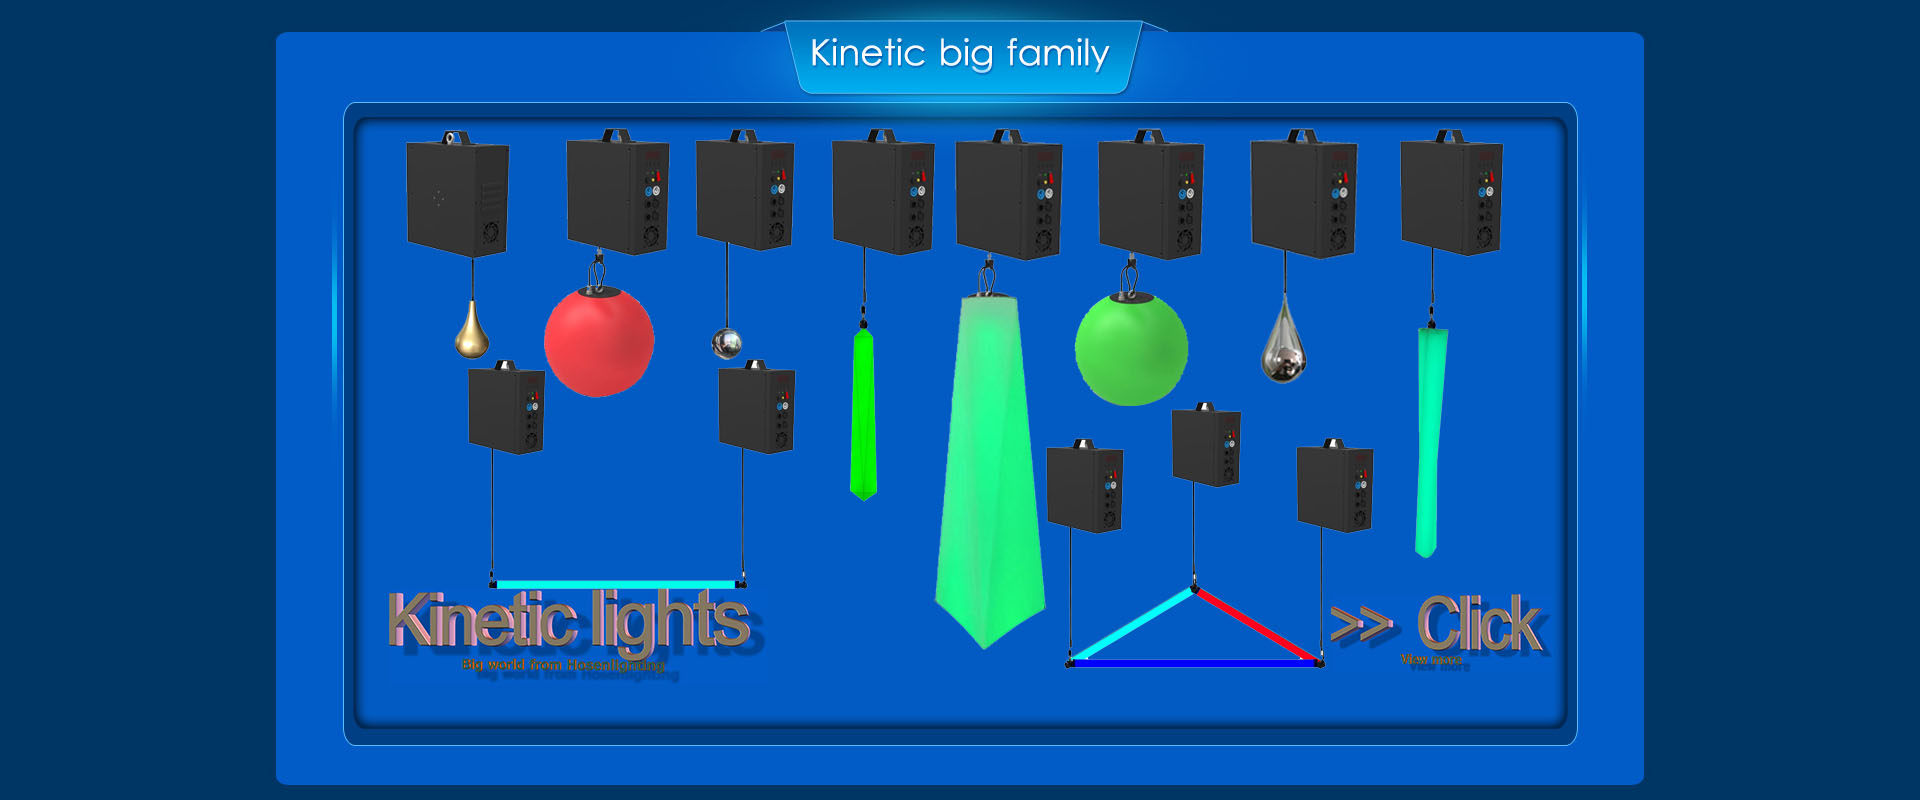 kinetic light DMX winches led brilliant Column Tube hoist winch HS-LMB60LBC - Kinetic light - 2